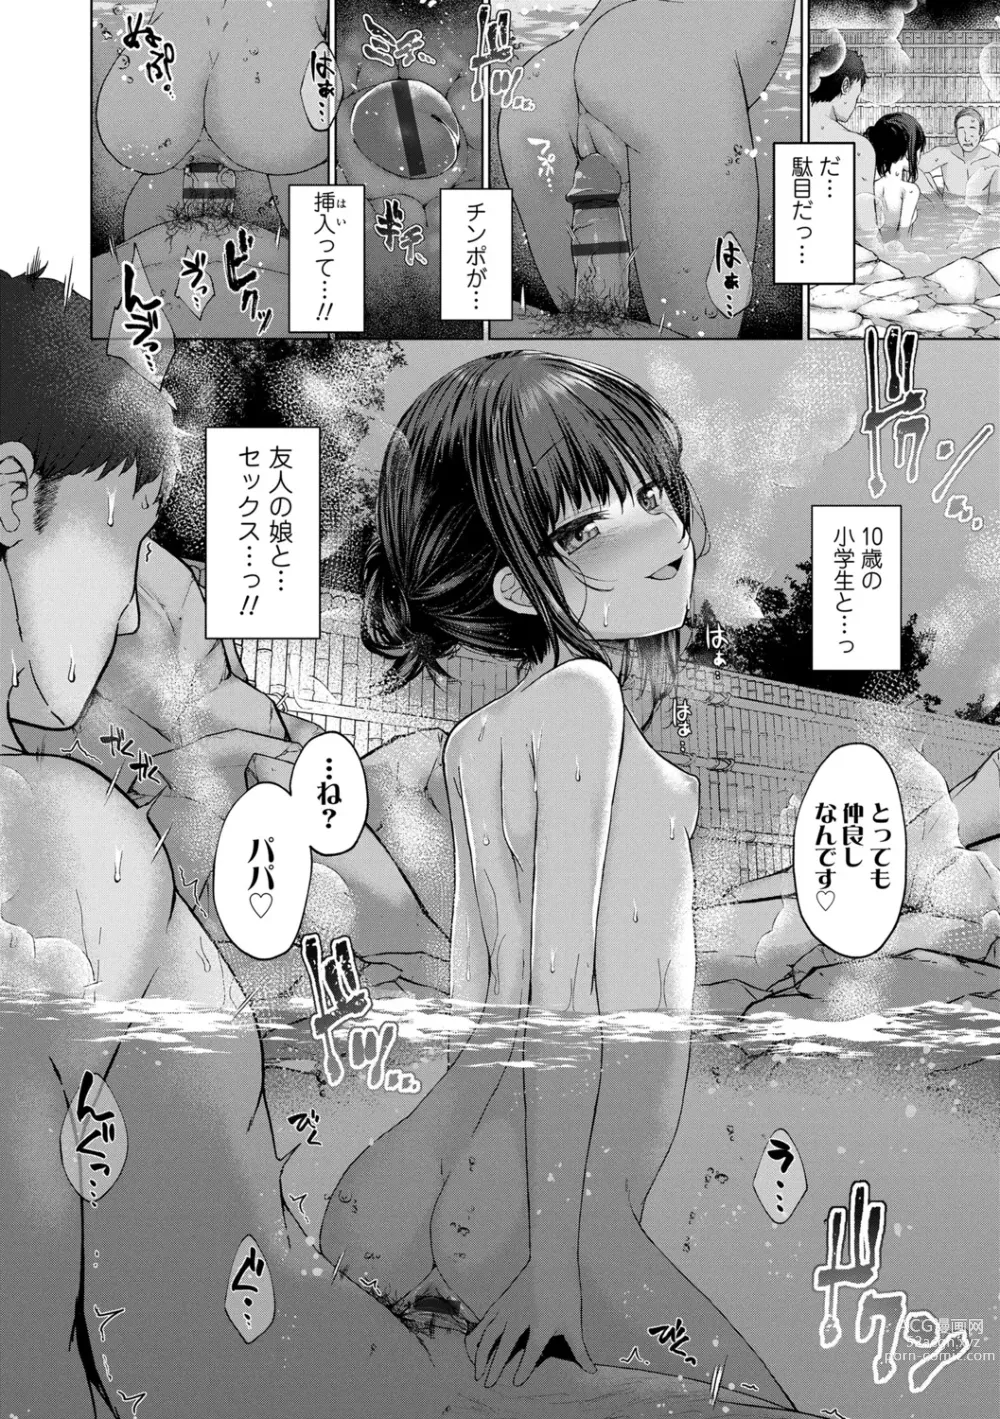 Page 20 of manga Akuma mitai ni kimi wa tatteta